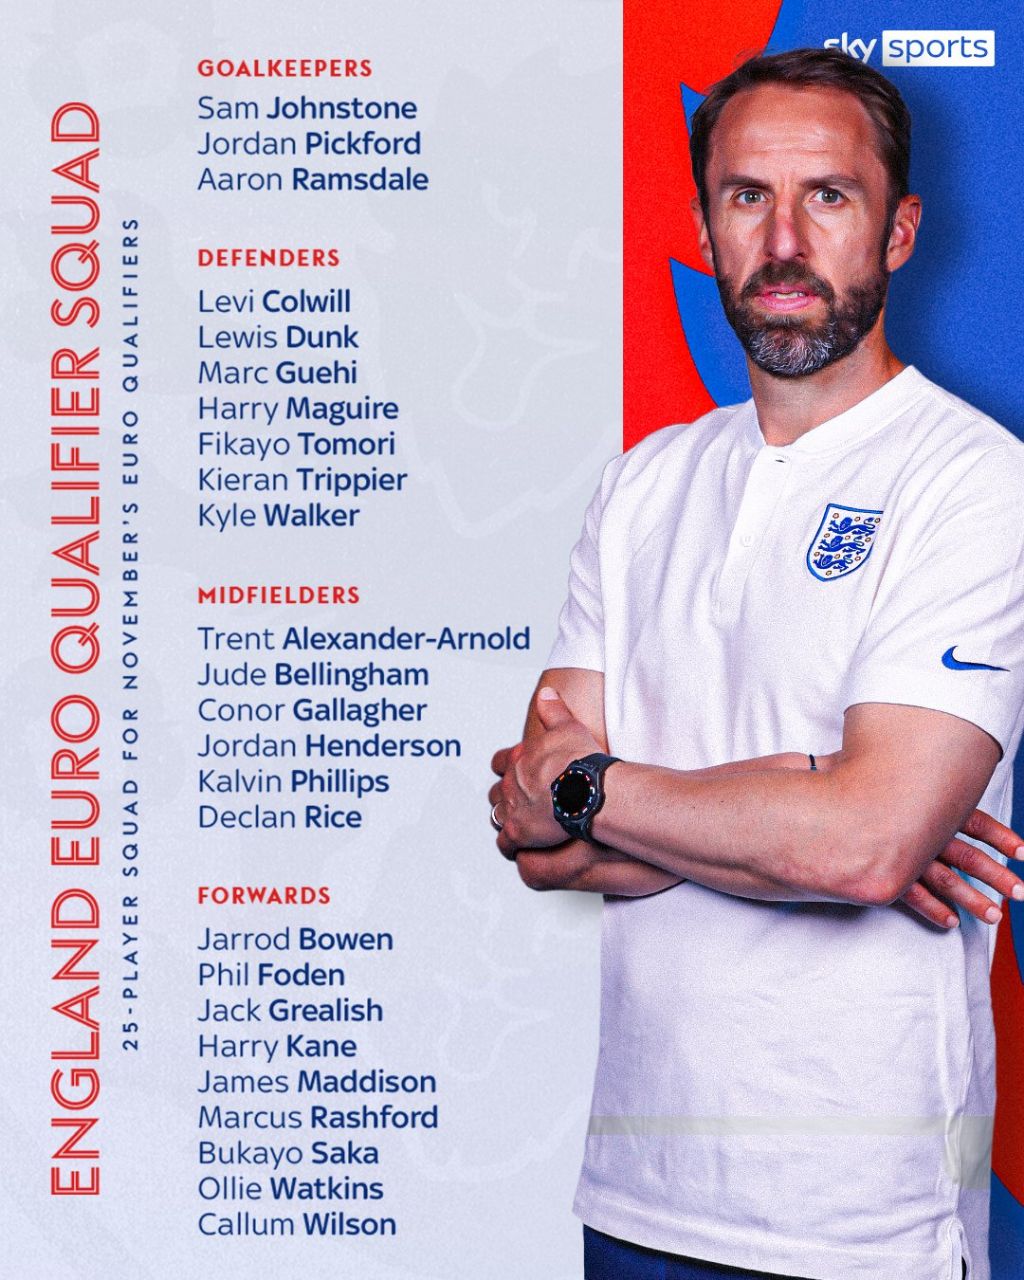 لیست تیم ملی انگلیس